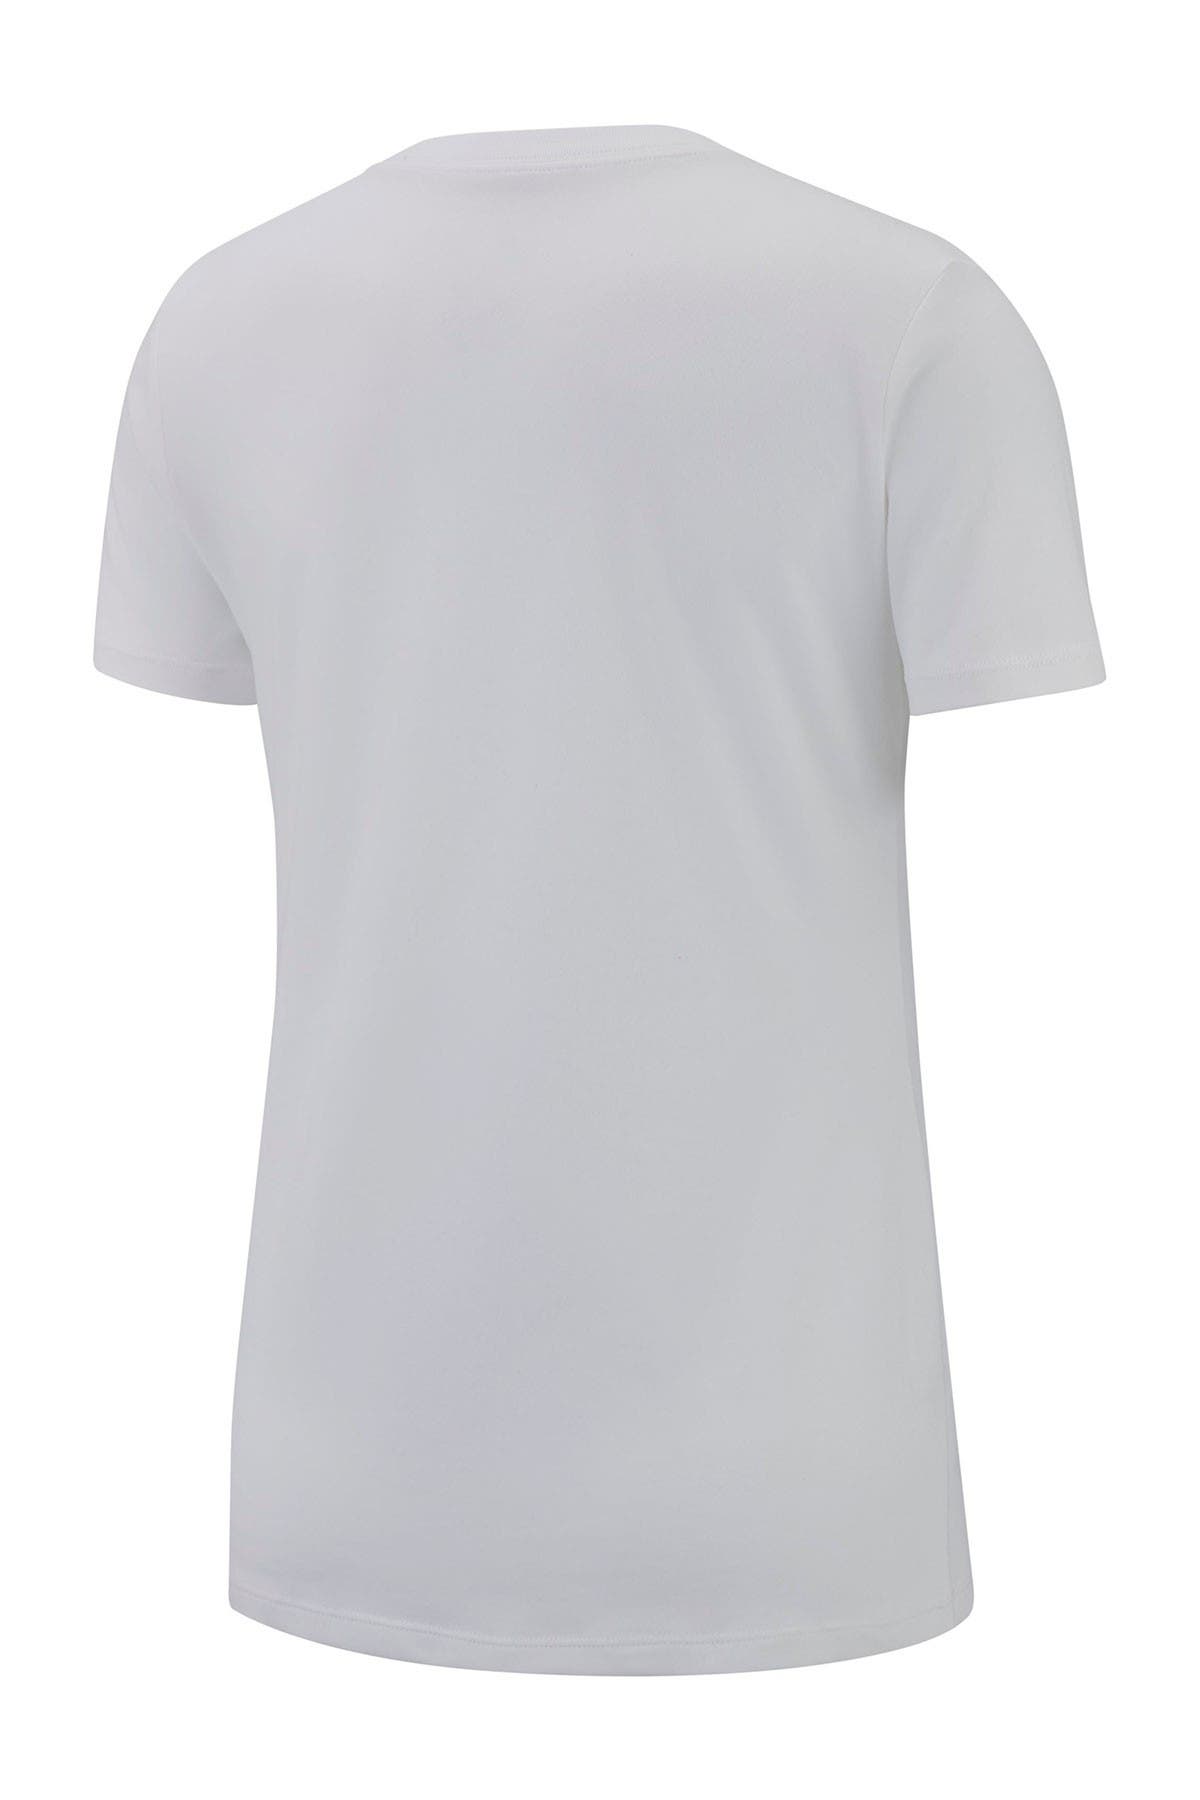 Nike Dri-fit Training T-shirt In White/black